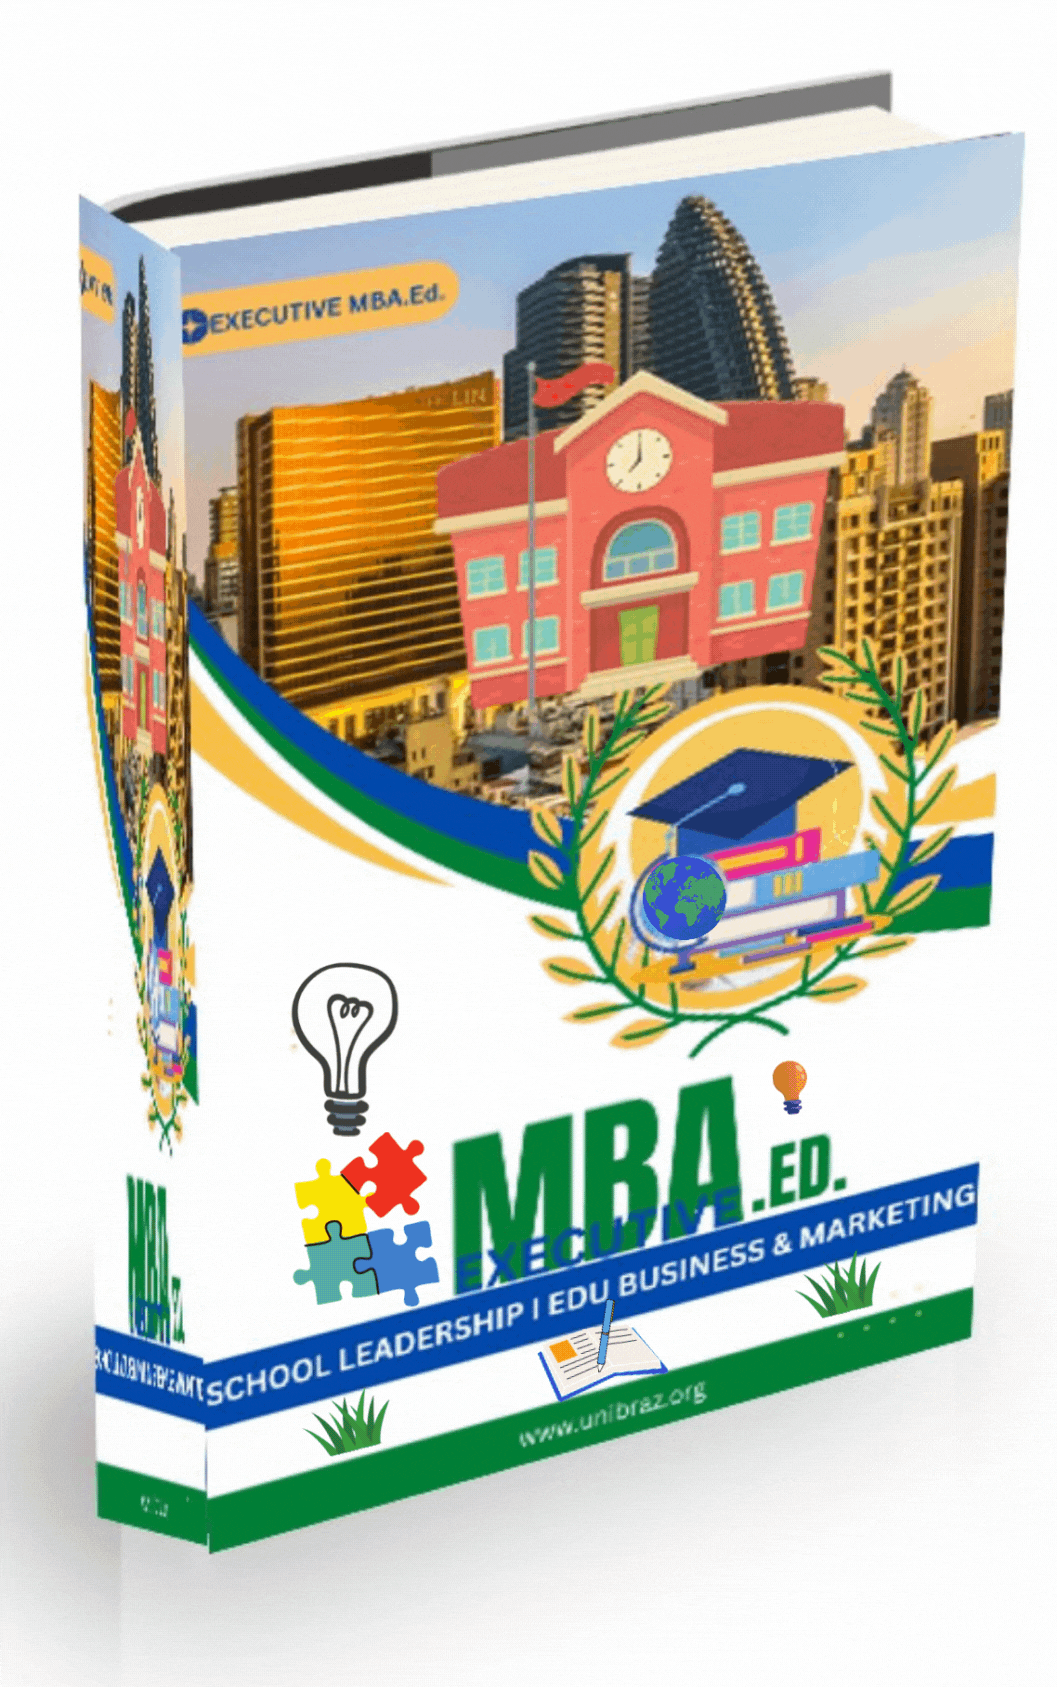 EXECUTIVE MASTERS OF BUSINESS ADMINISTRATION – EDUCATION (MBA.Ed.) – SCHOOL LEADERSHIP I EDUCATION BUSINESS & MARKETING